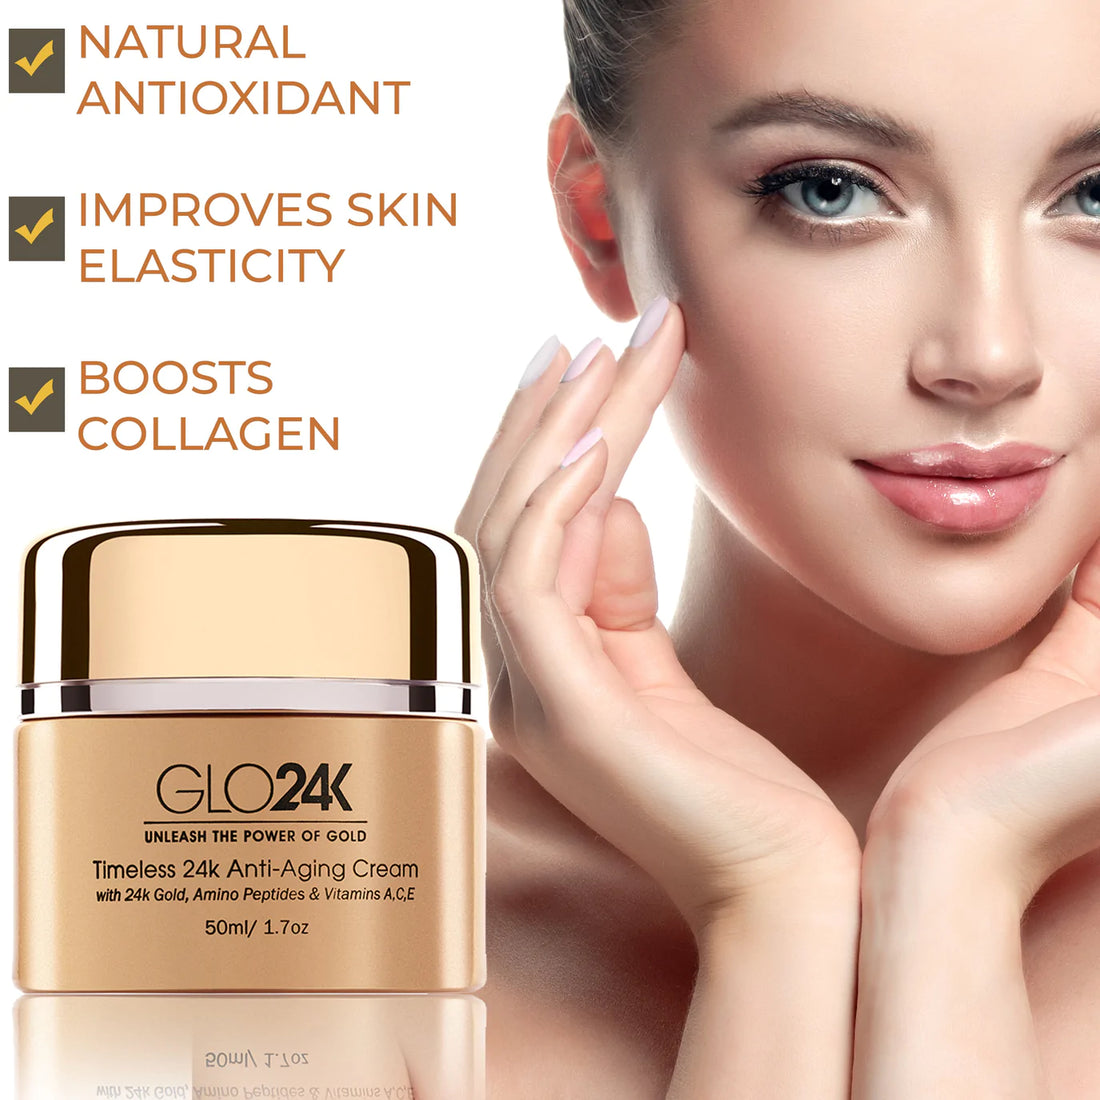 GLO24K Timeless 24k Anti-Ageing Cream, benefits